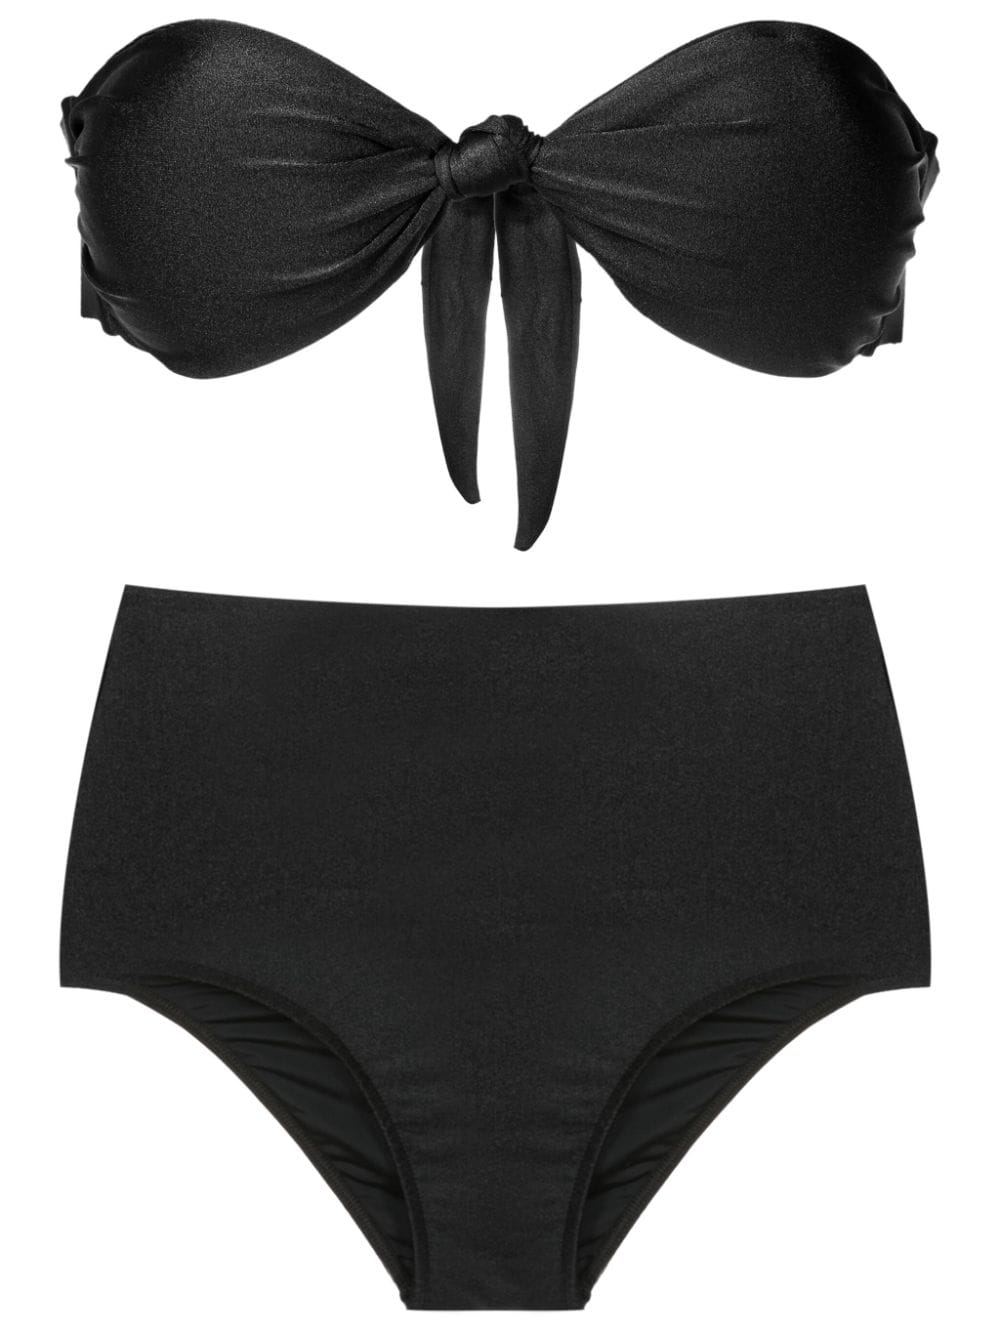 Timeless Black High-Waisted Strapless Bikini Product